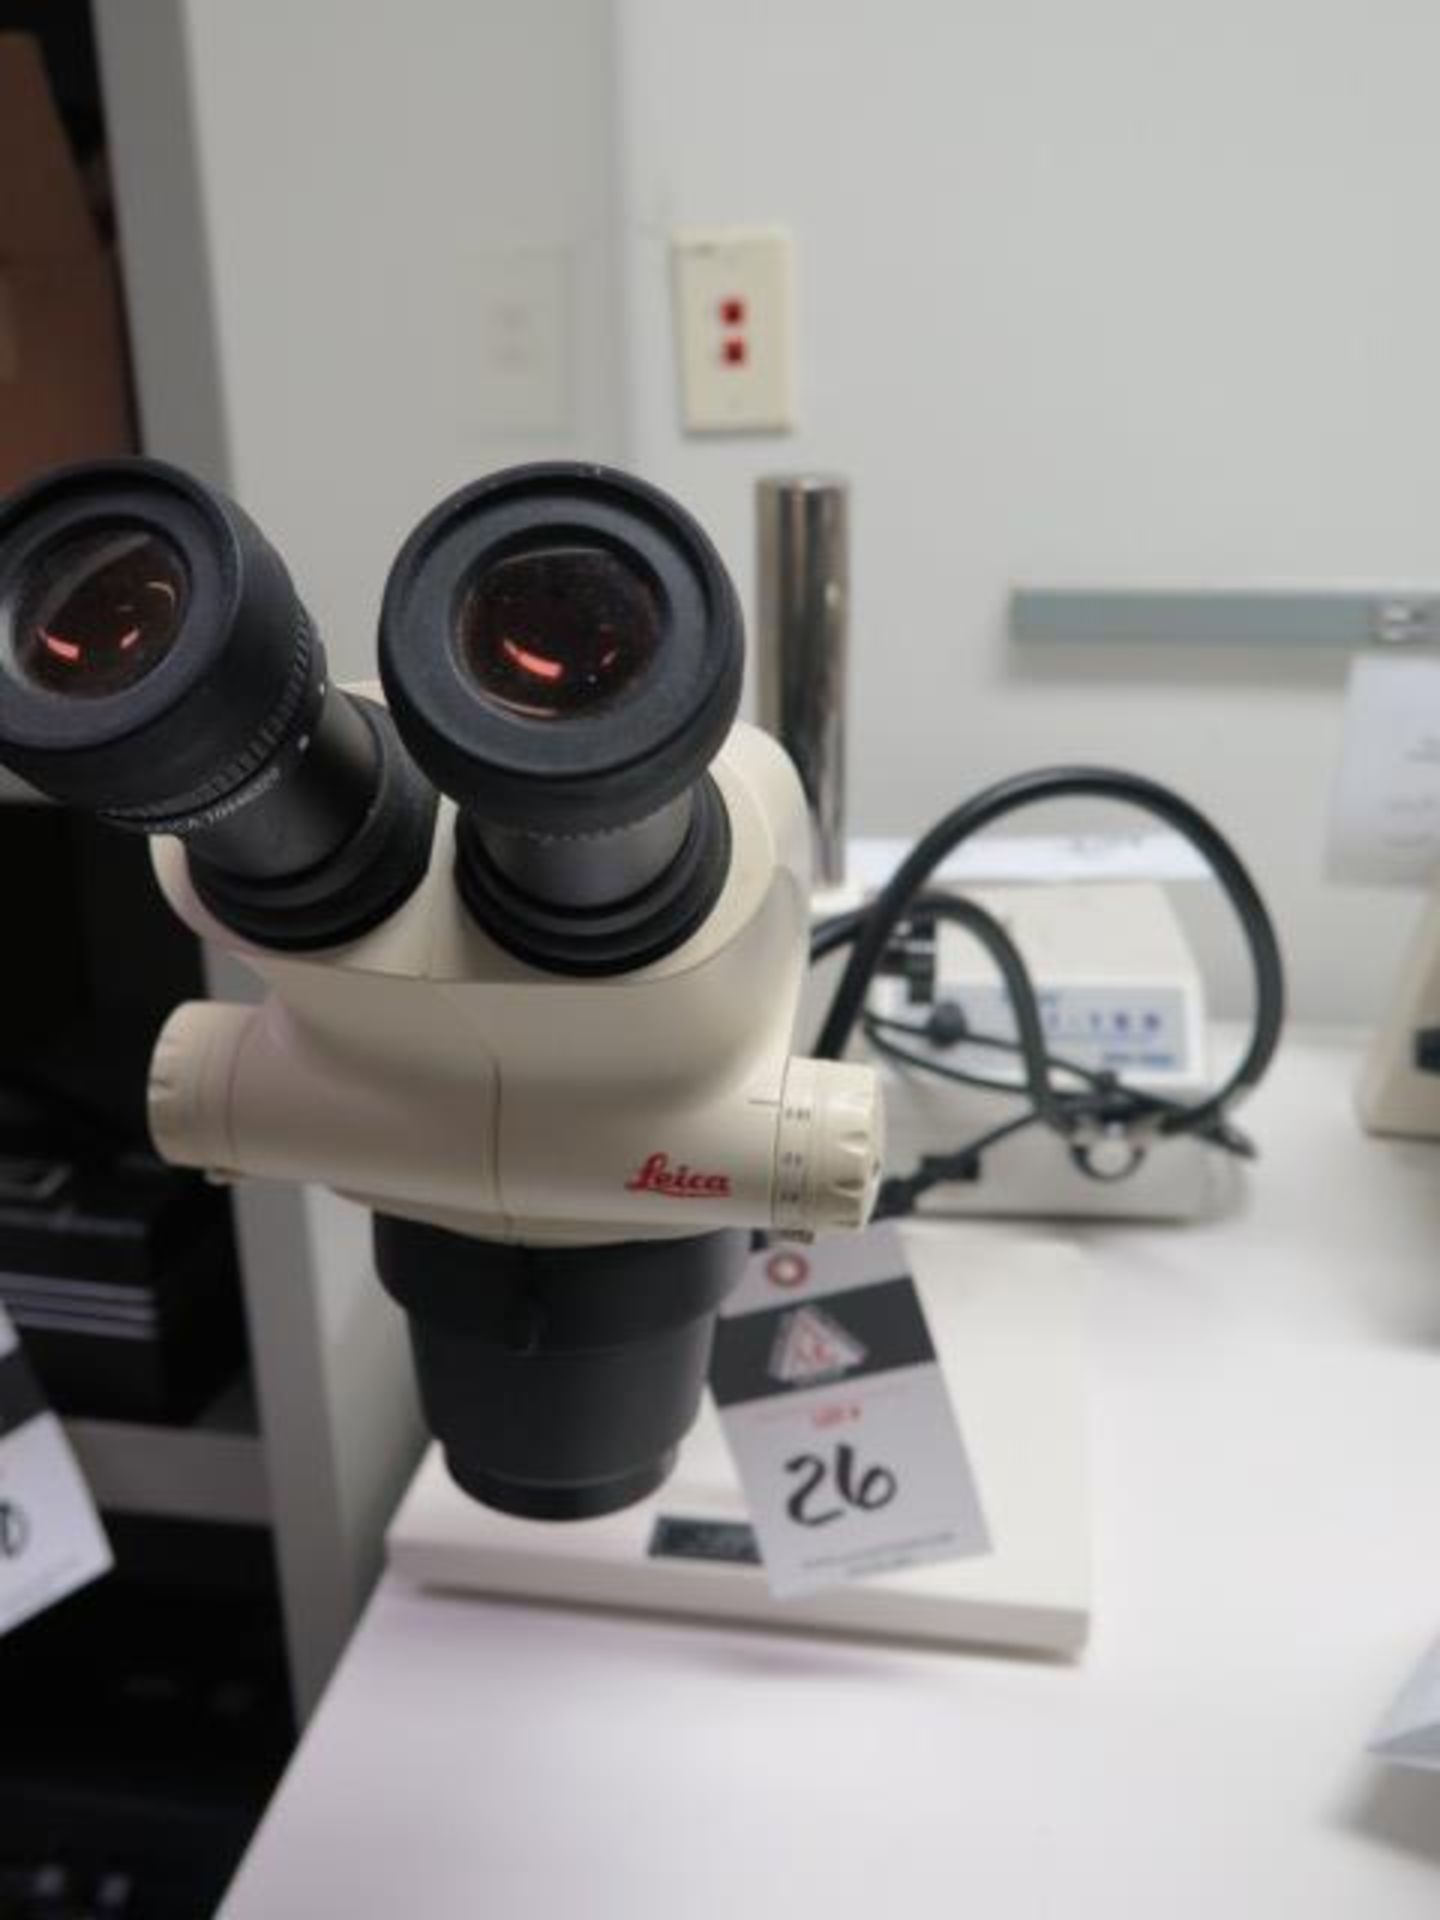 Leica S6E Stereo Microscope w/ Dolan-Jenner Fiber-Light Source (SOLD AS-IS - NO WARRANTY)